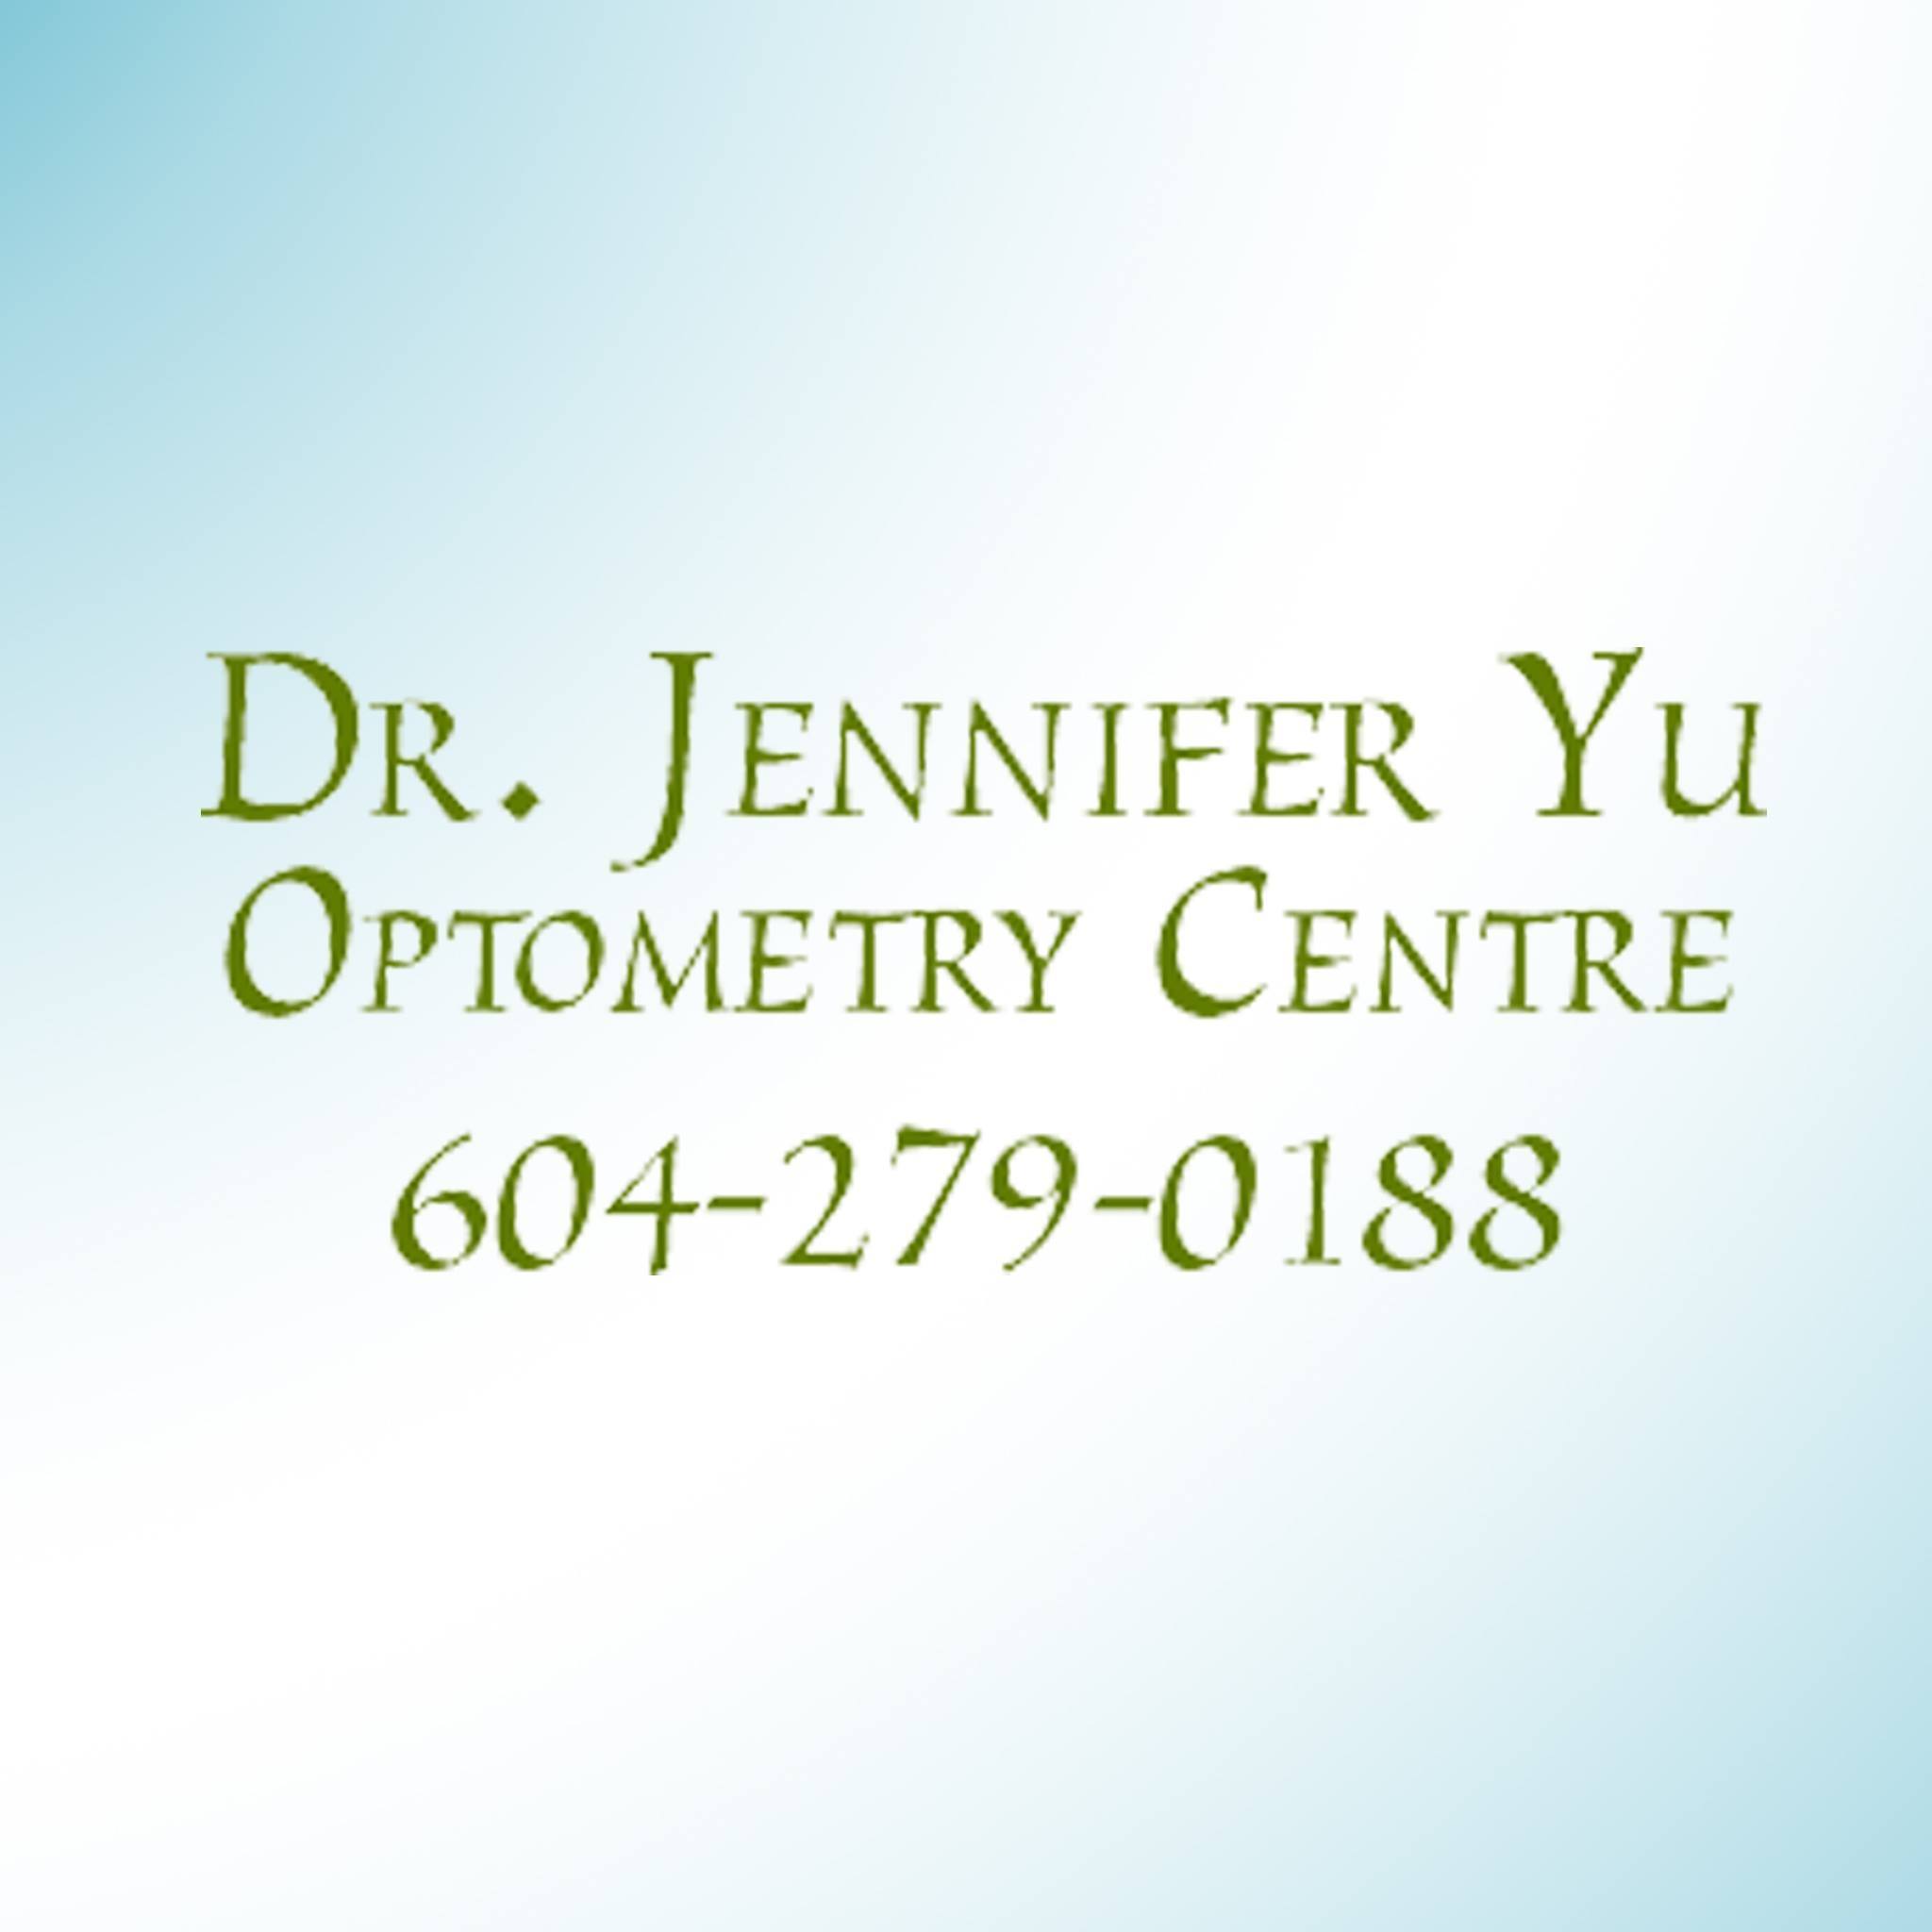 Dr. Jennifer Yu Optometry Centre